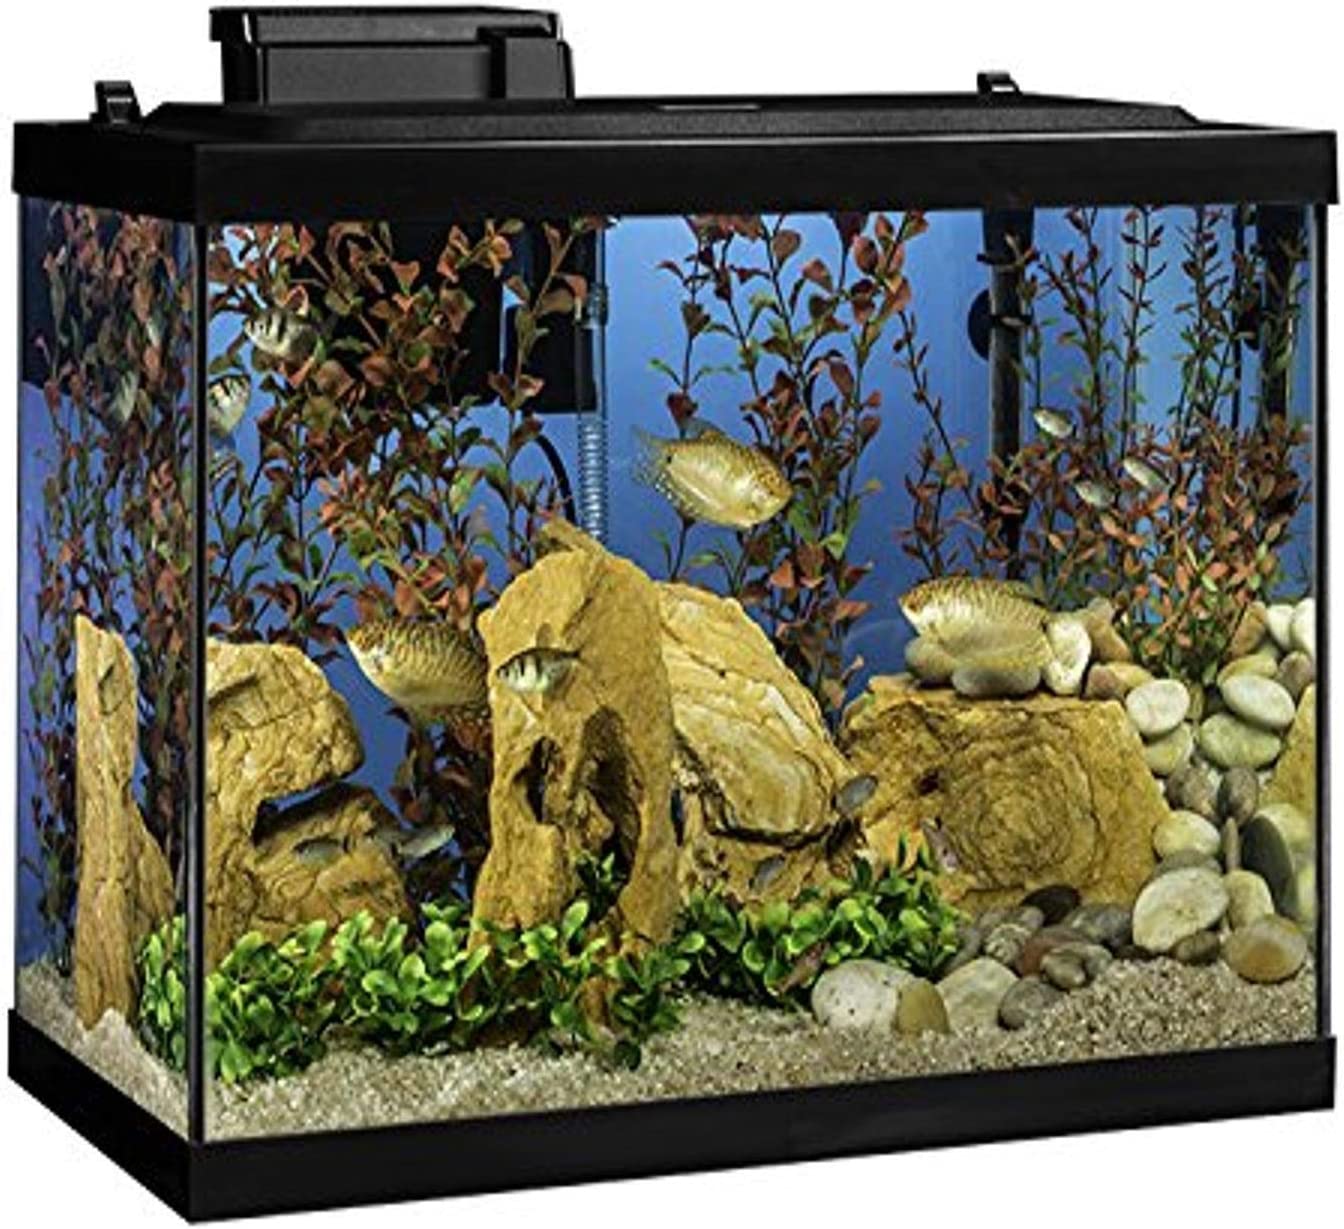 Aquarium Fish Tank Kit with LED Lighting and Decoration